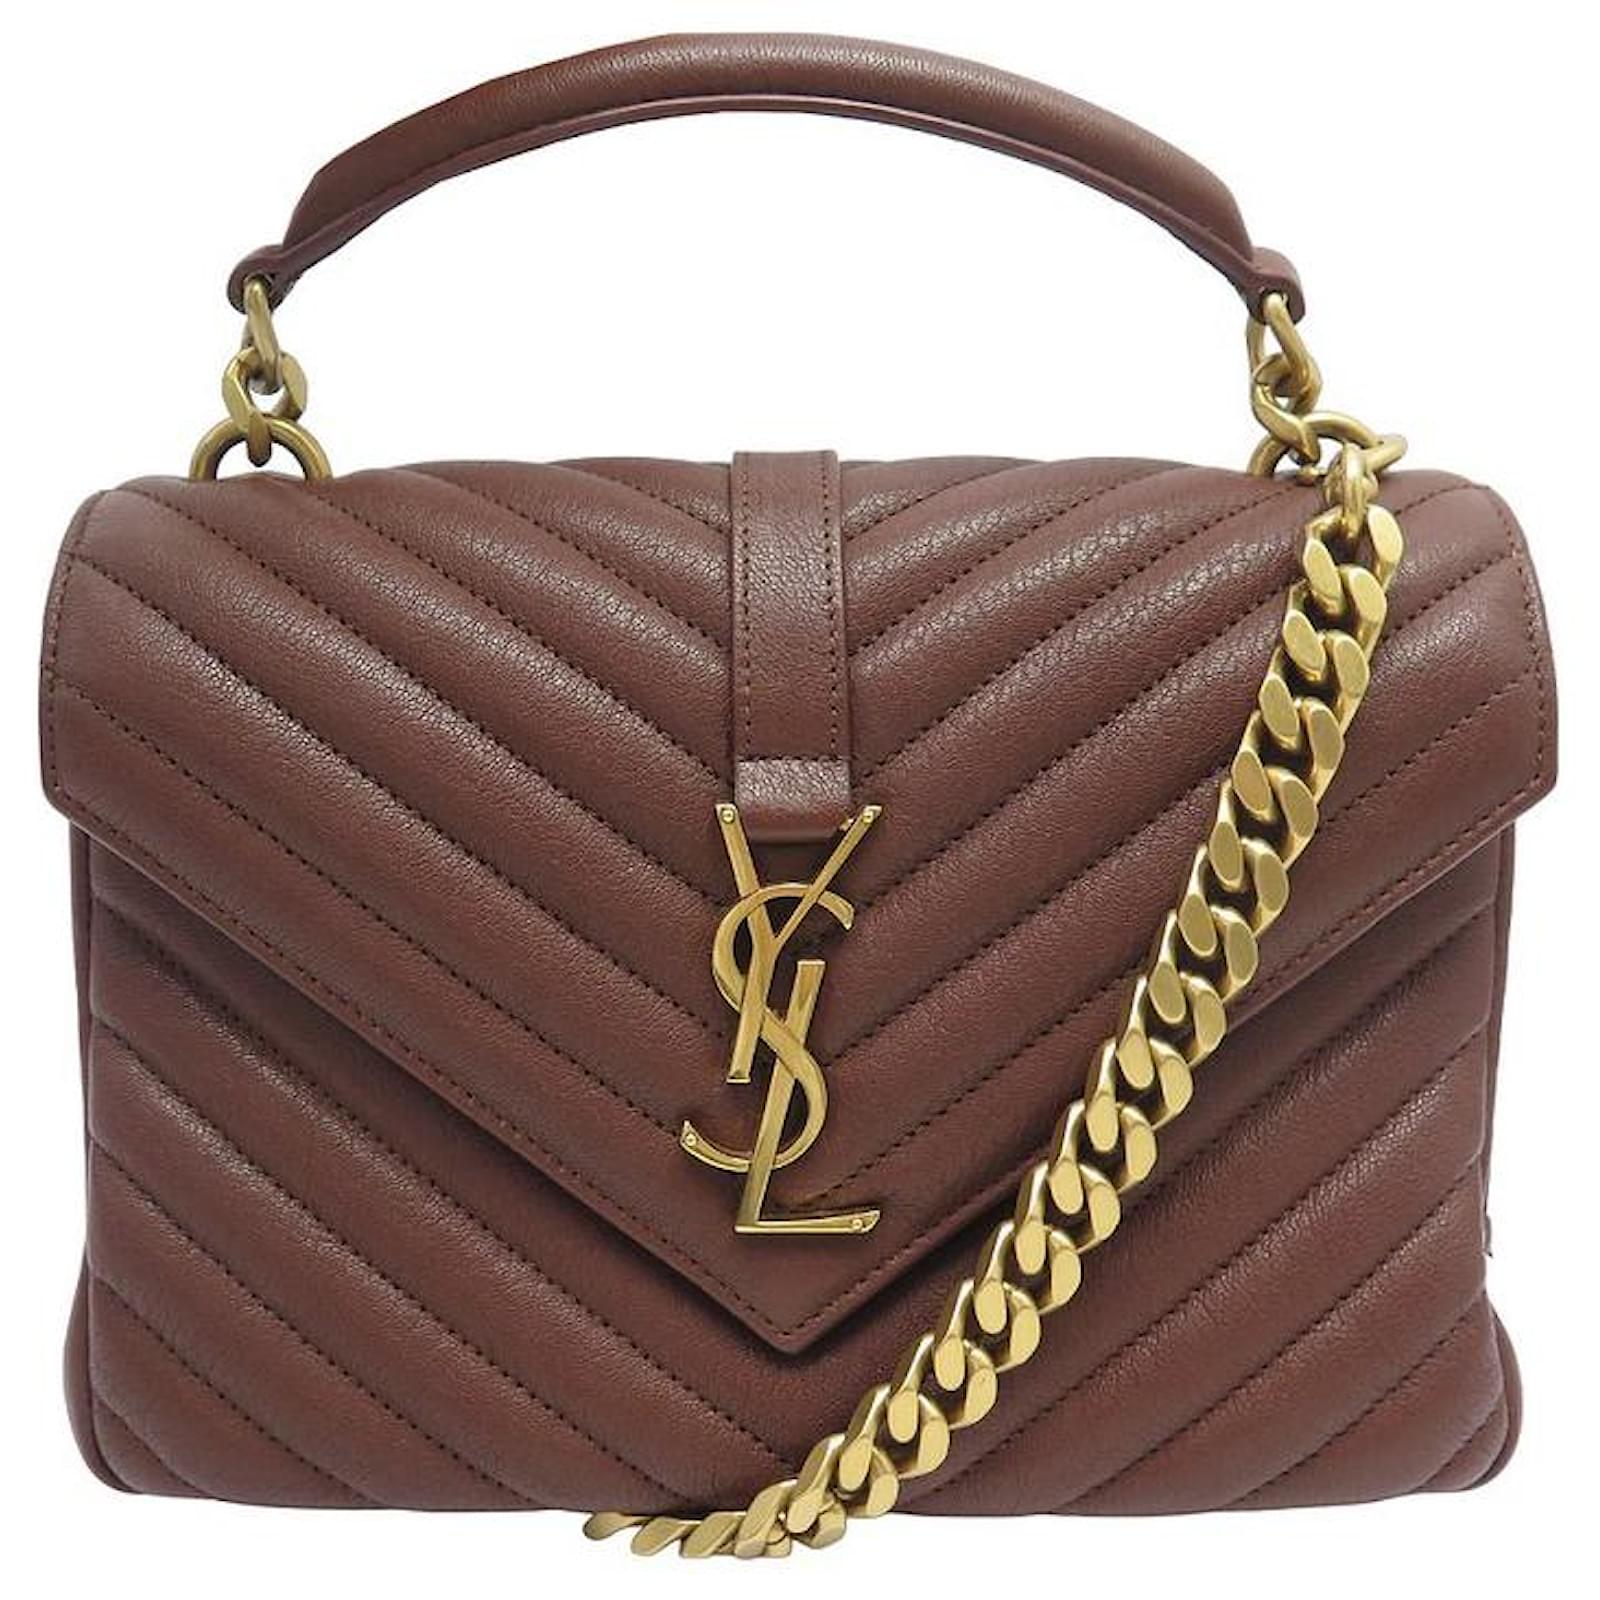 Ysl purse | Ysl purse, Patent leather bag, Purses